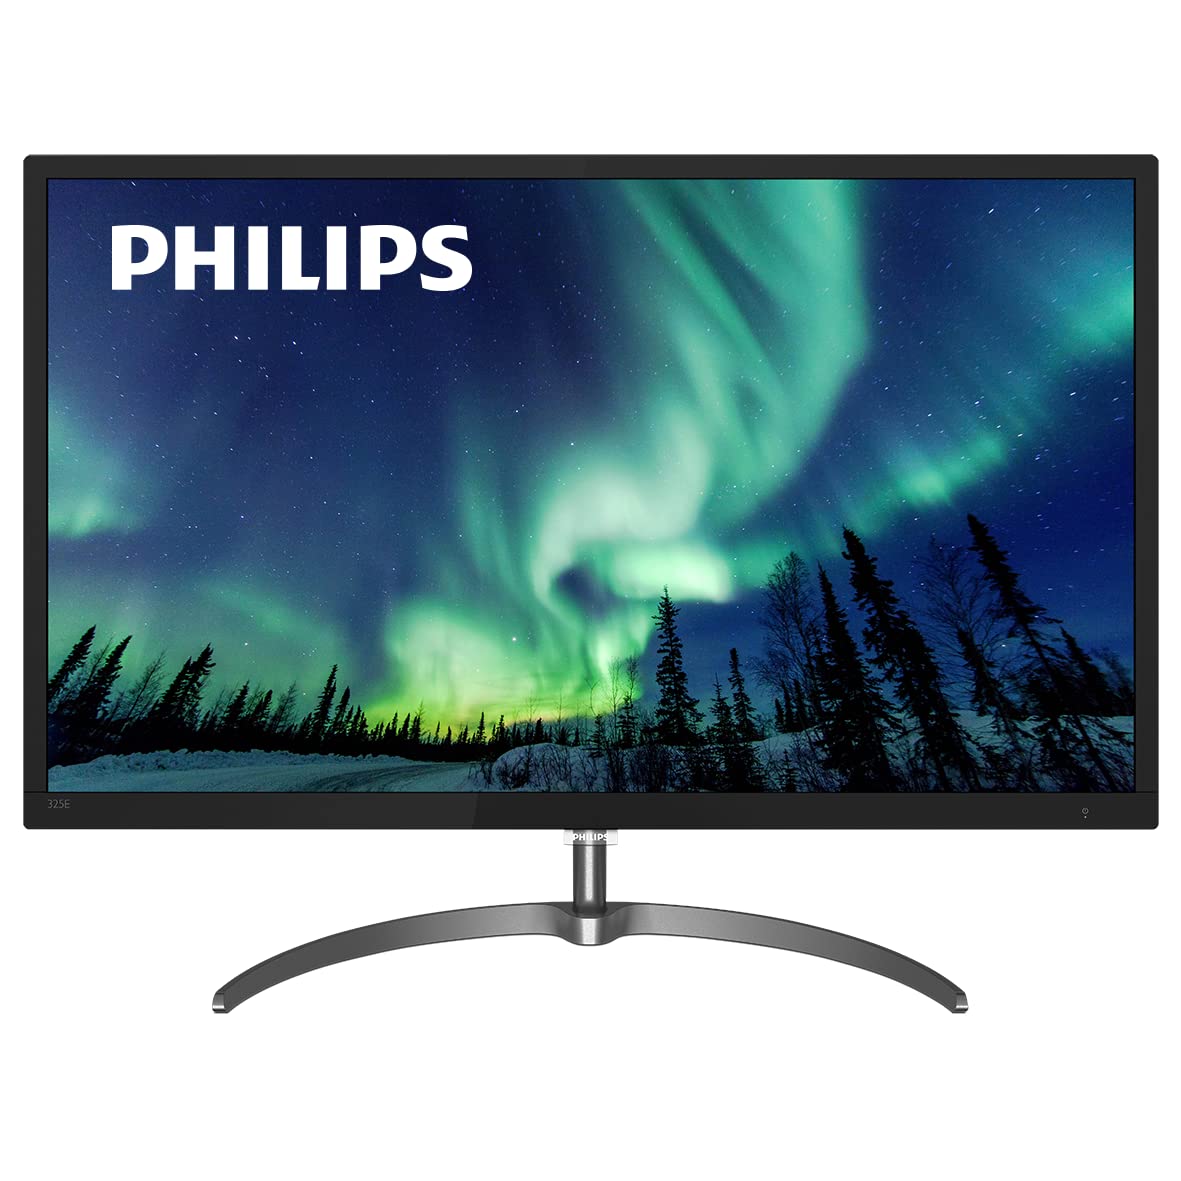 PHILIPS 325E8 32'' IPS LCD, QHD 2560x1440 Pixels, 1.07 Billion Colors, 75Hz, AMD FreeSync, LowBlue Mode, HDMI/DisplayPort/DVI/VGA, VESA, 4 Year Advance Replacement Warranty